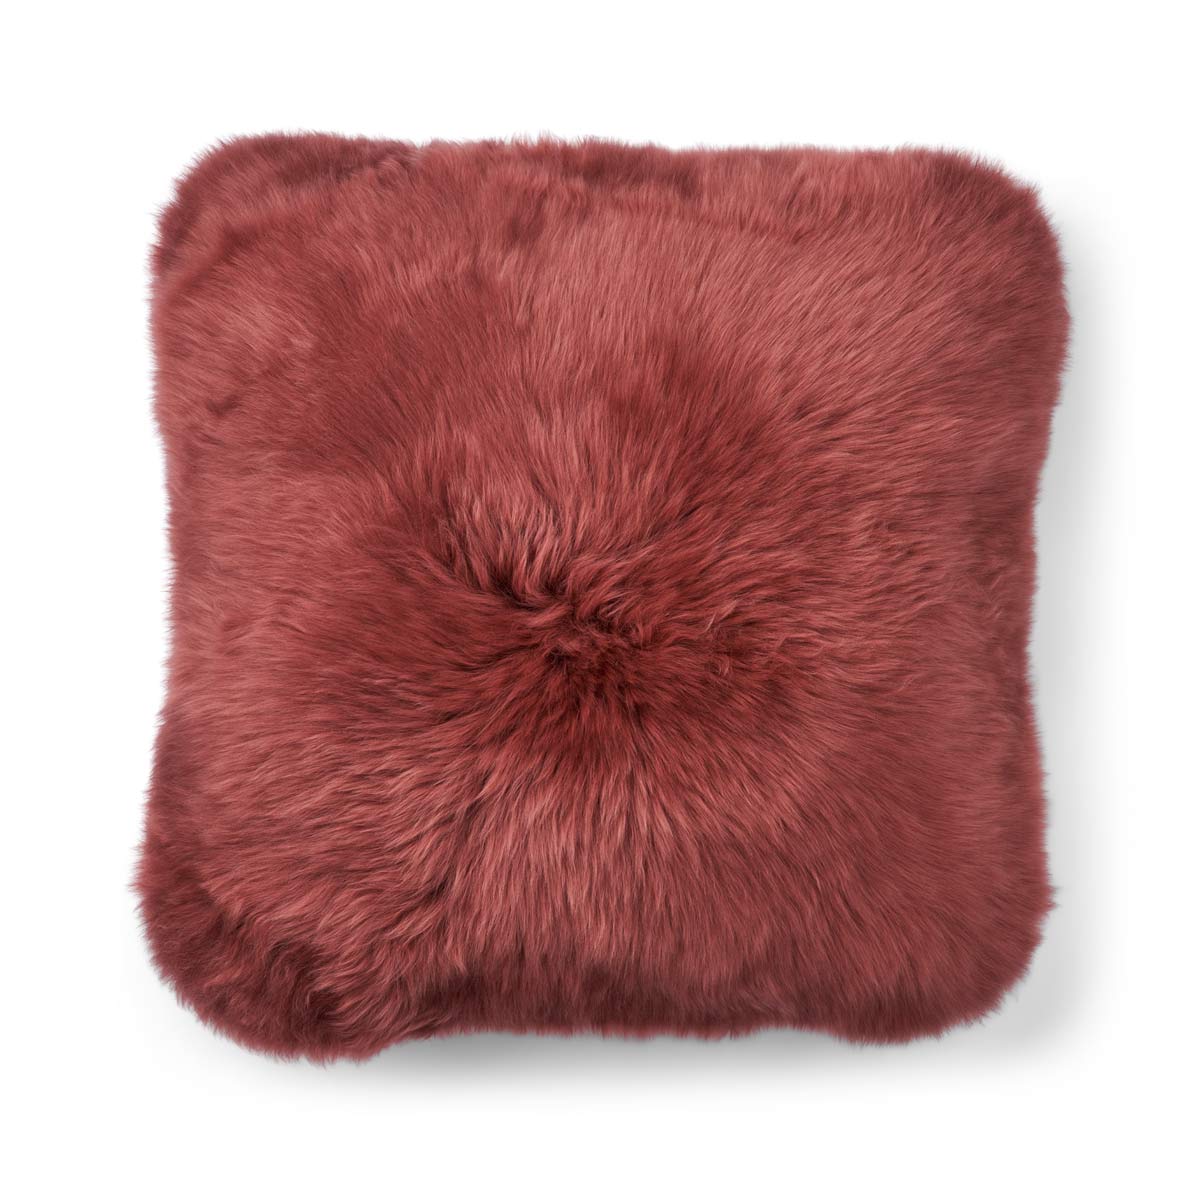 Cushion | New Zealand Sheepskin | Double sided, LW